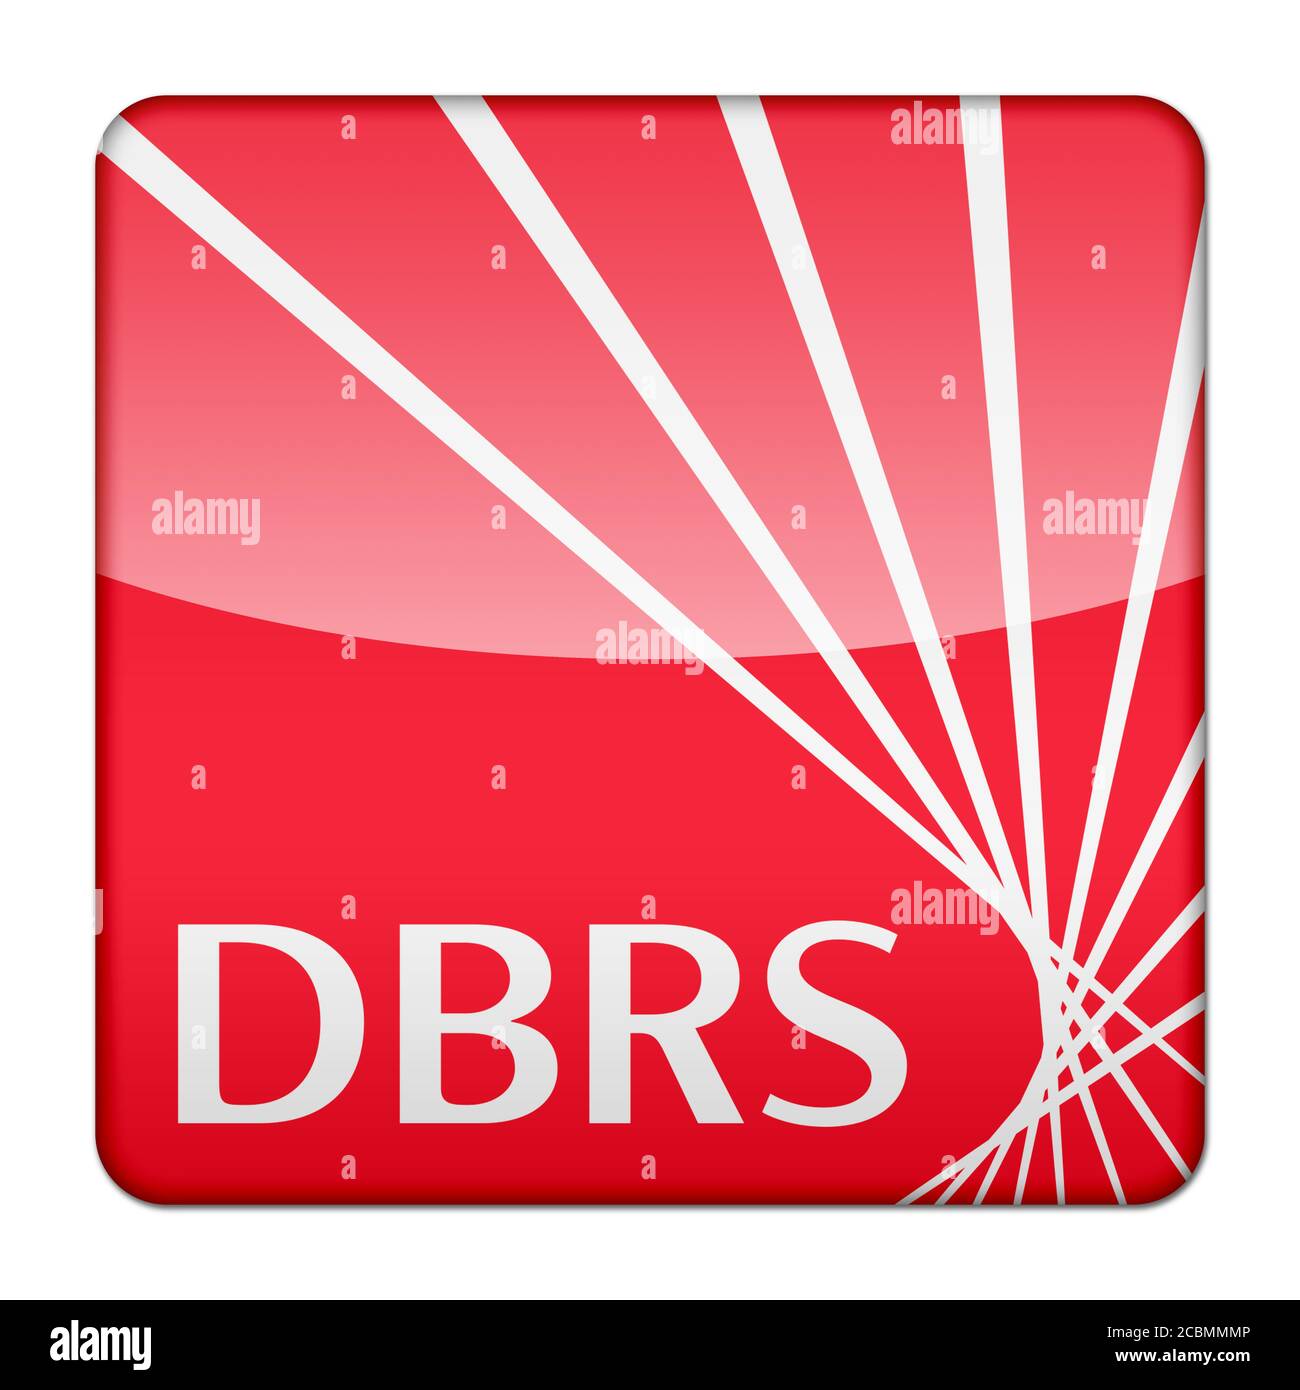 Dominion Bond Rating Service logo icono del botón de aplicaciones aisladas Foto de stock